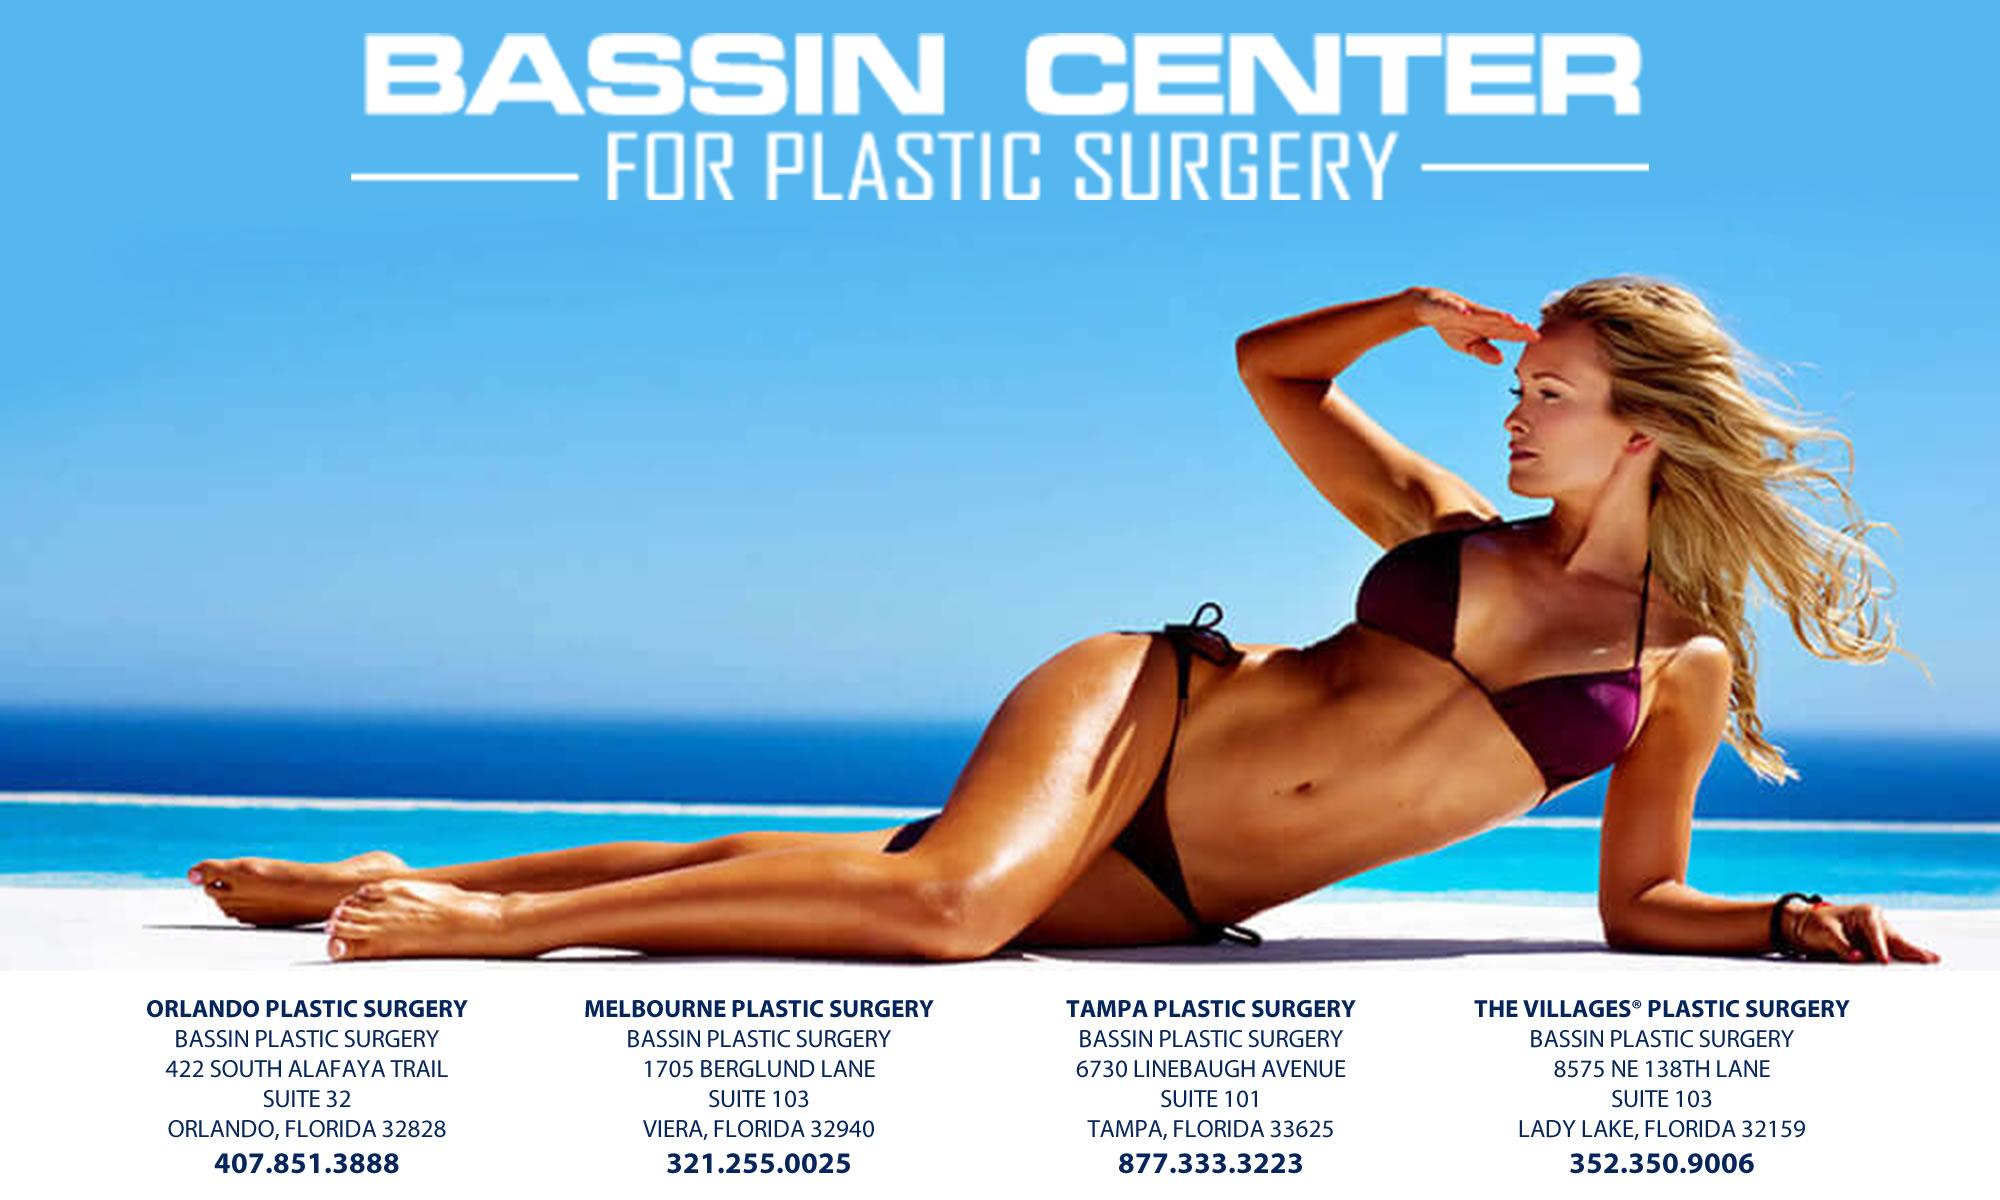 https://www.plastic-surgery-florida.com/OG_Images/JPEGS_for_Twitter/Bassin-Center-for-Plastic-Surgery.jpg